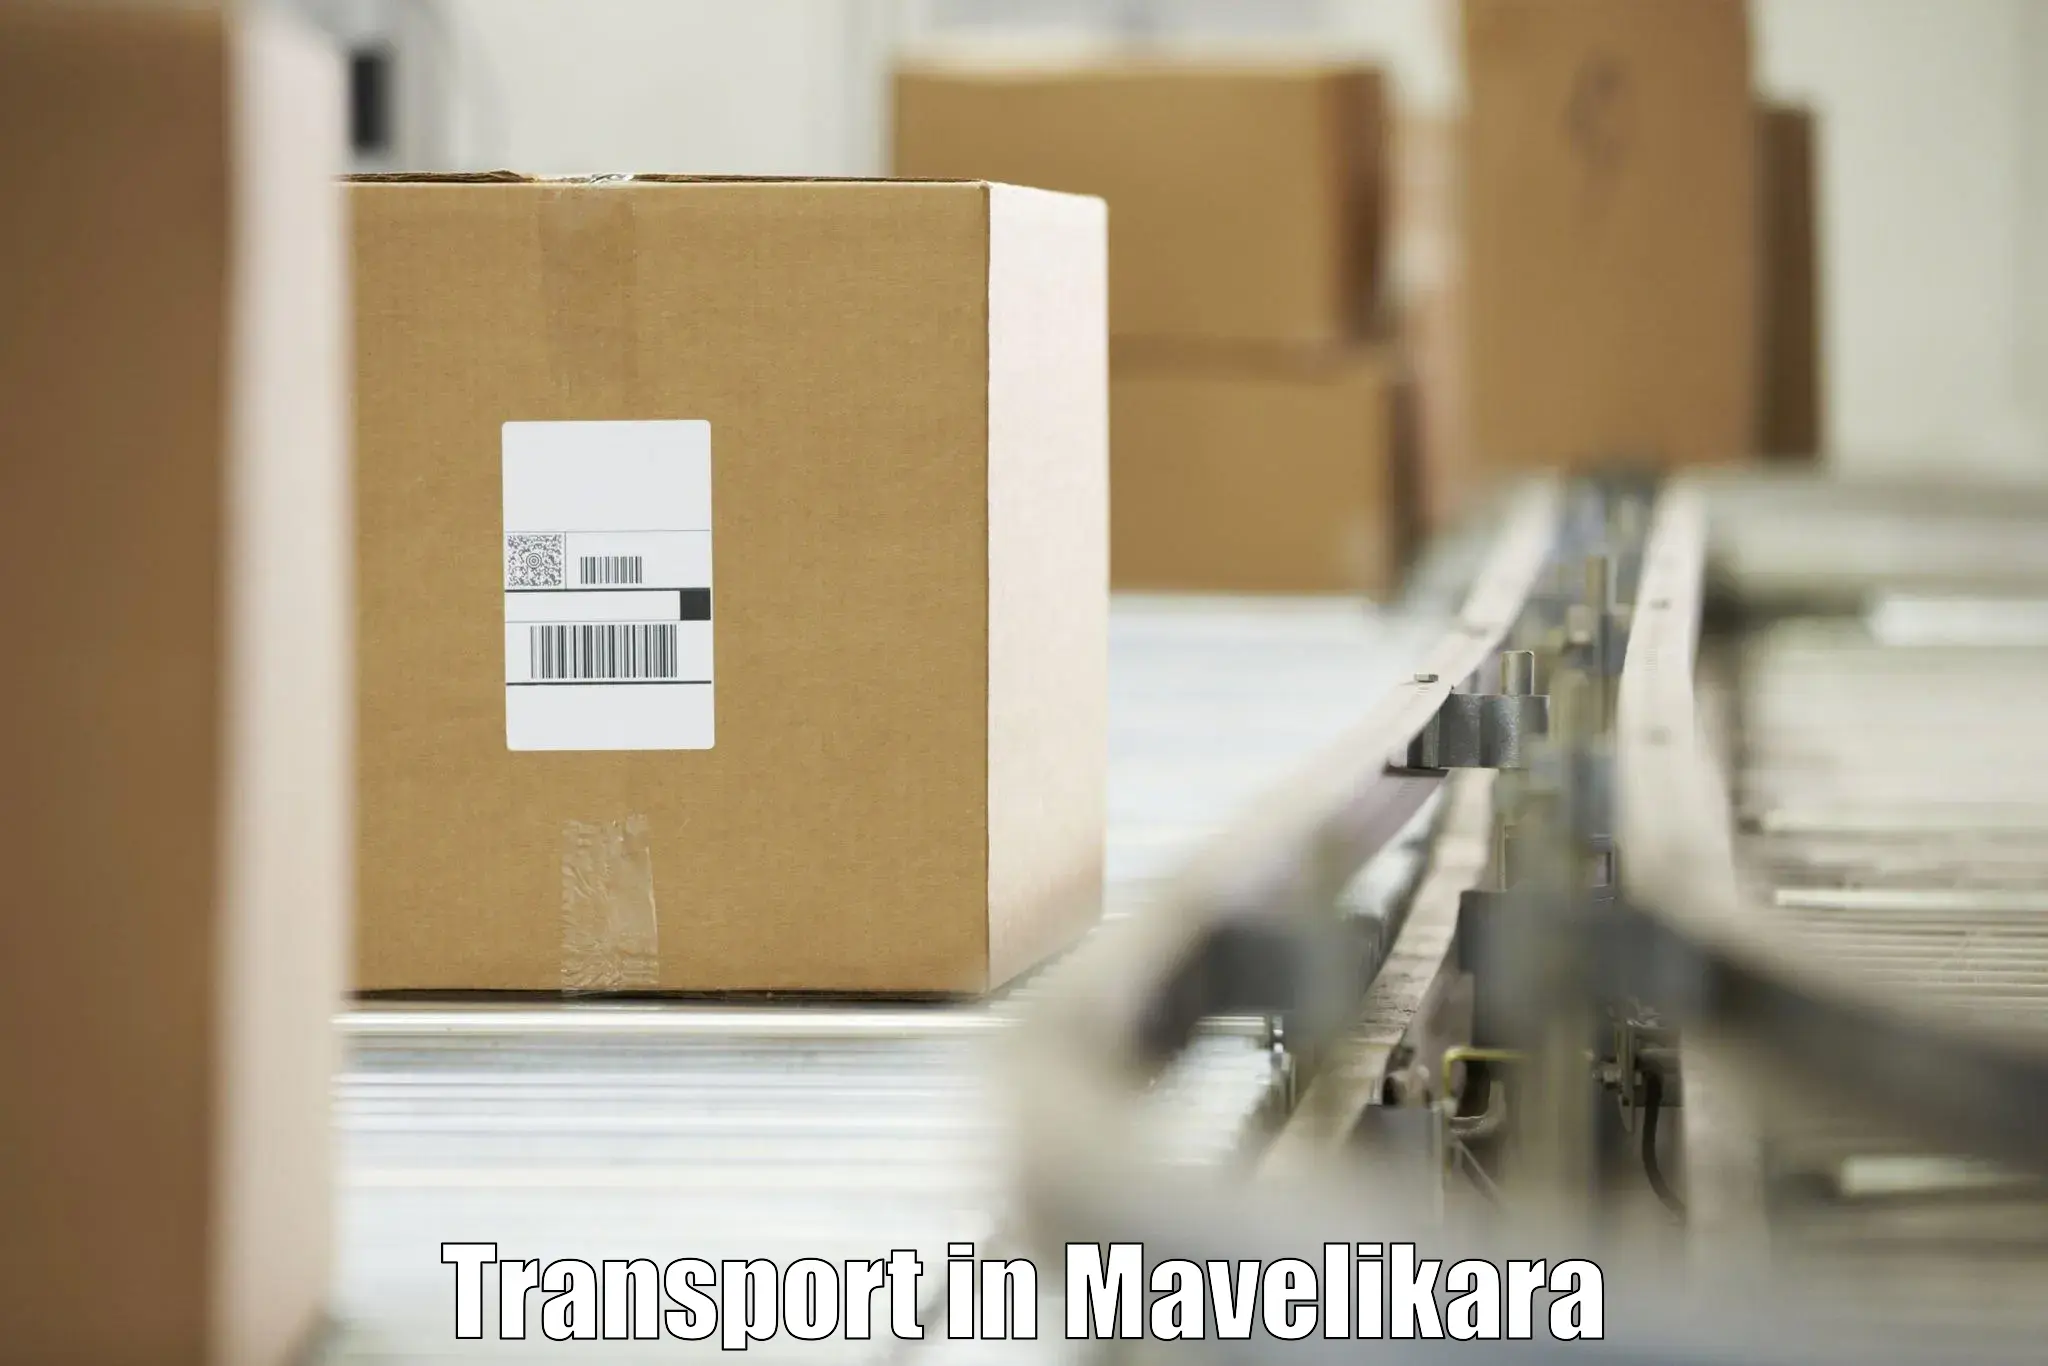 Container transport service in Mavelikara